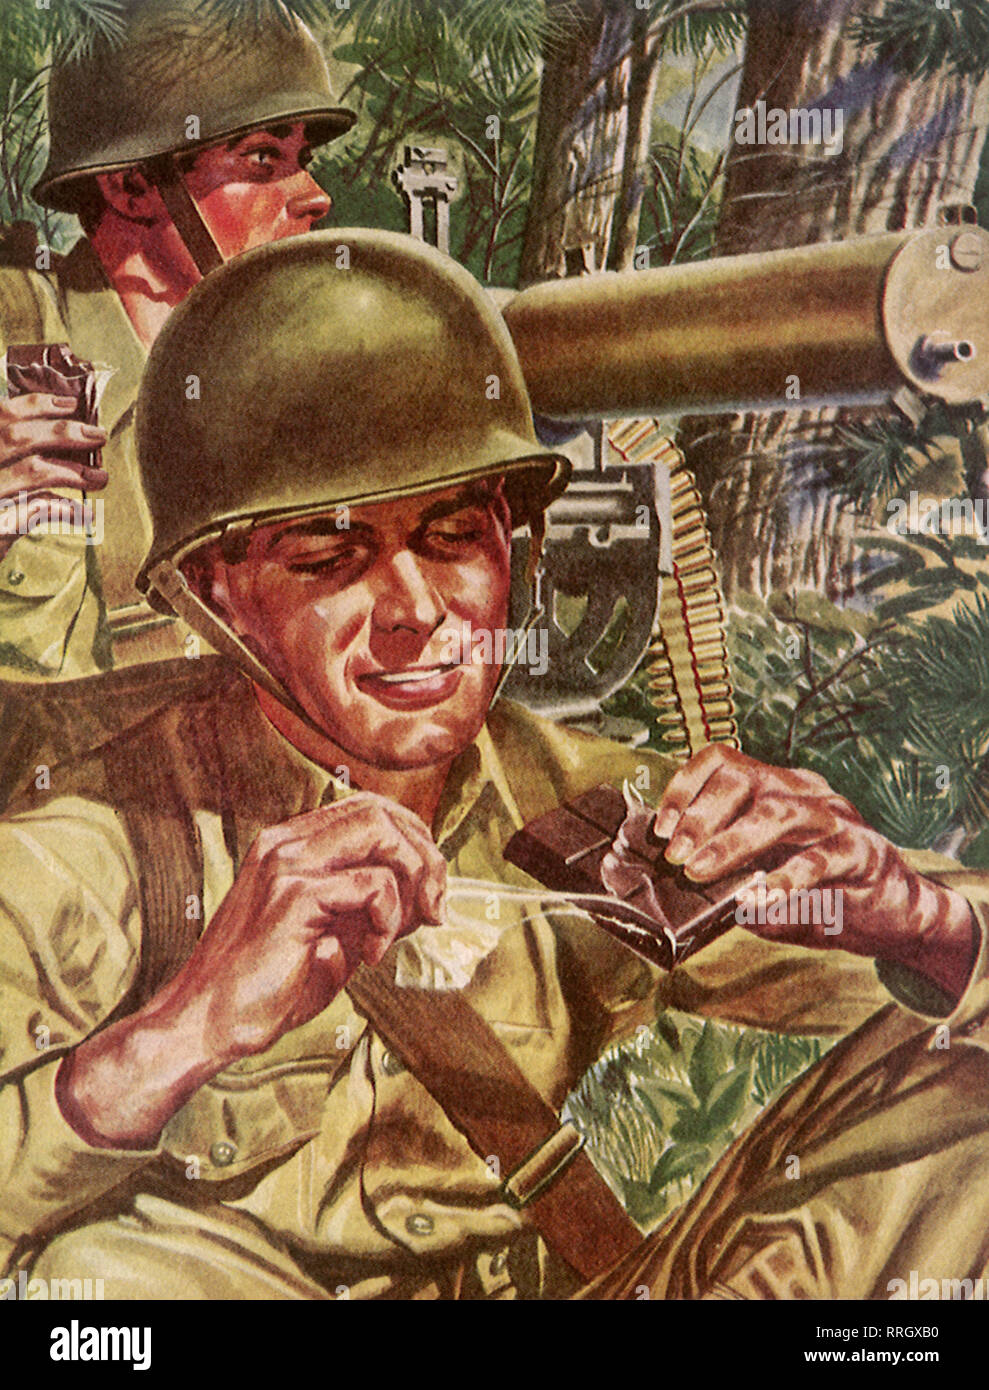 World War II Soldier unwraps Chocolate. Stock Photo